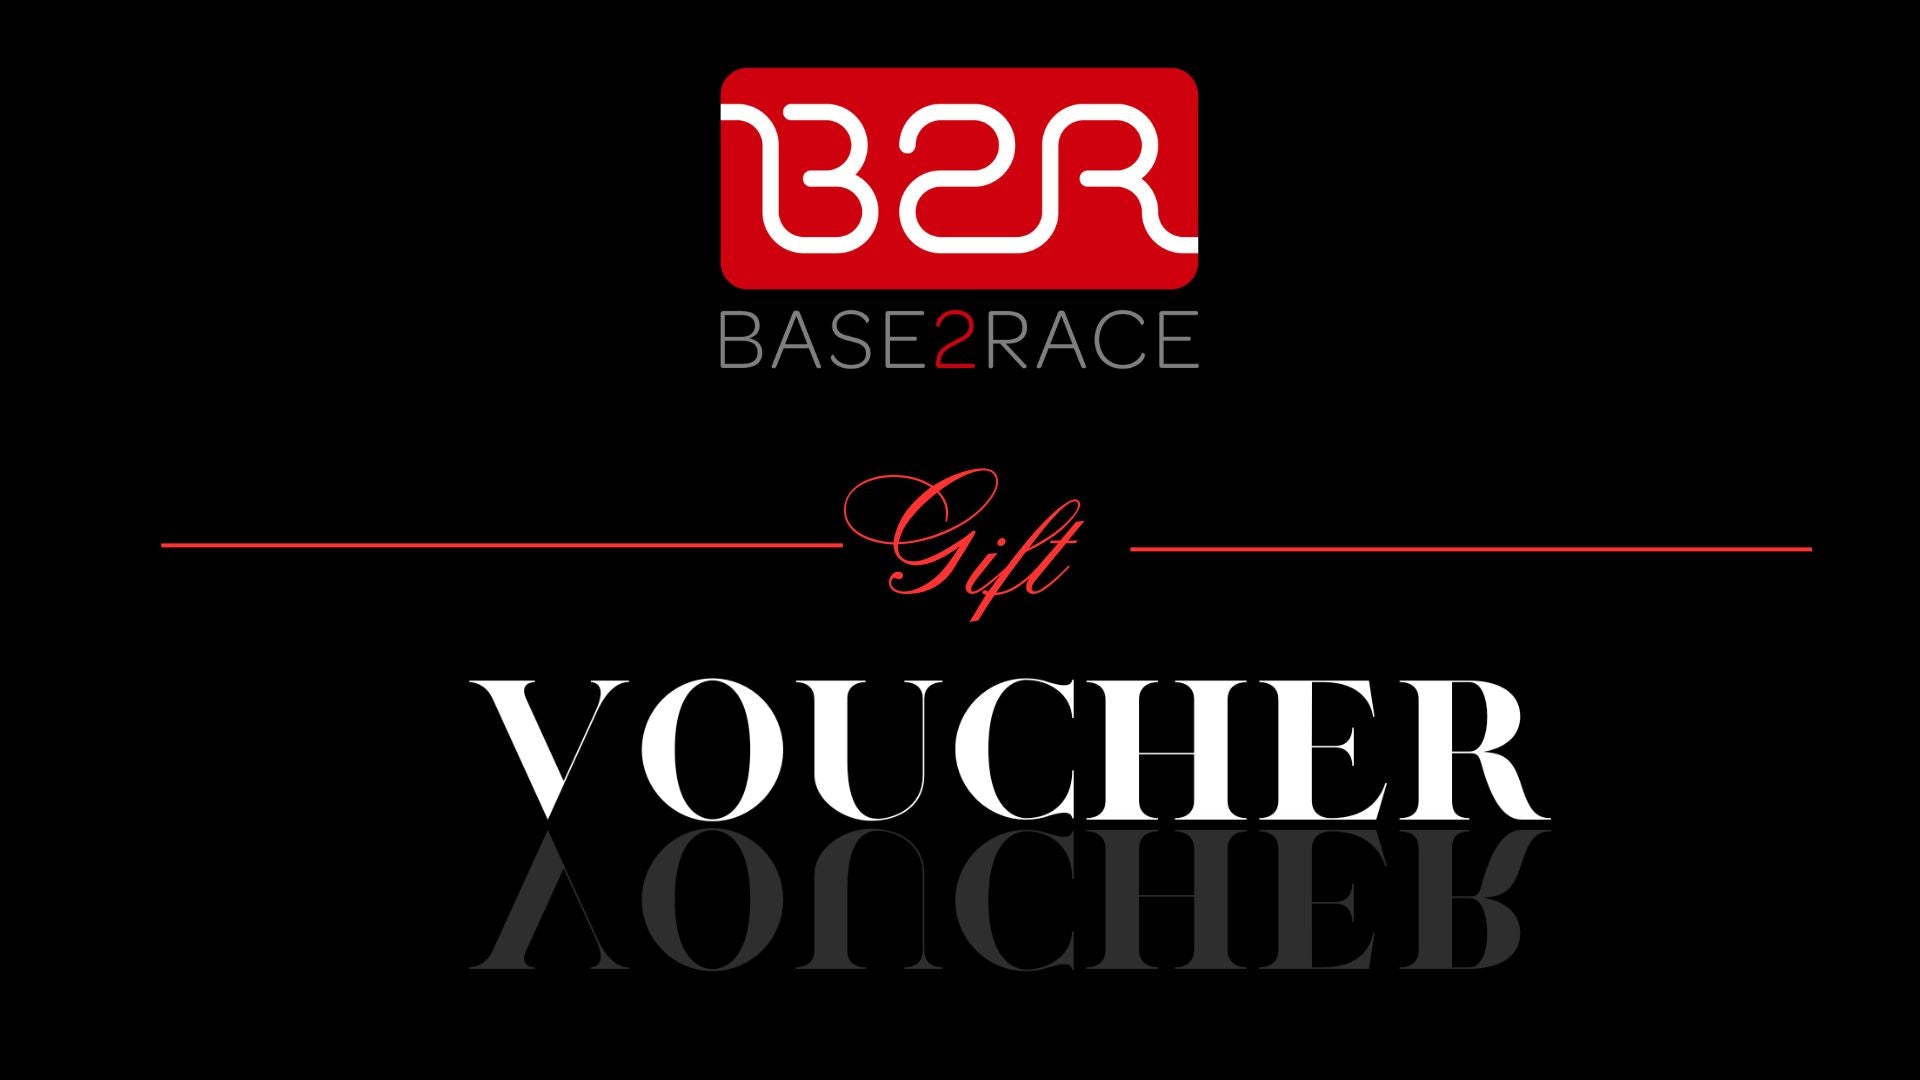 Base2Race Gift Voucher